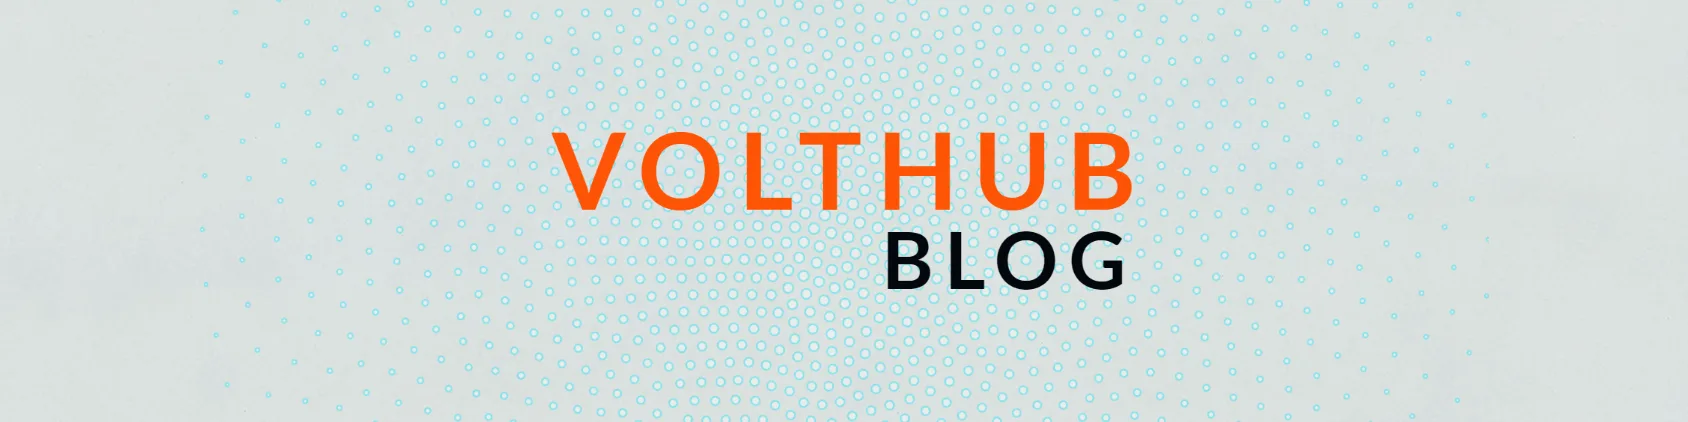 Volthub Blog